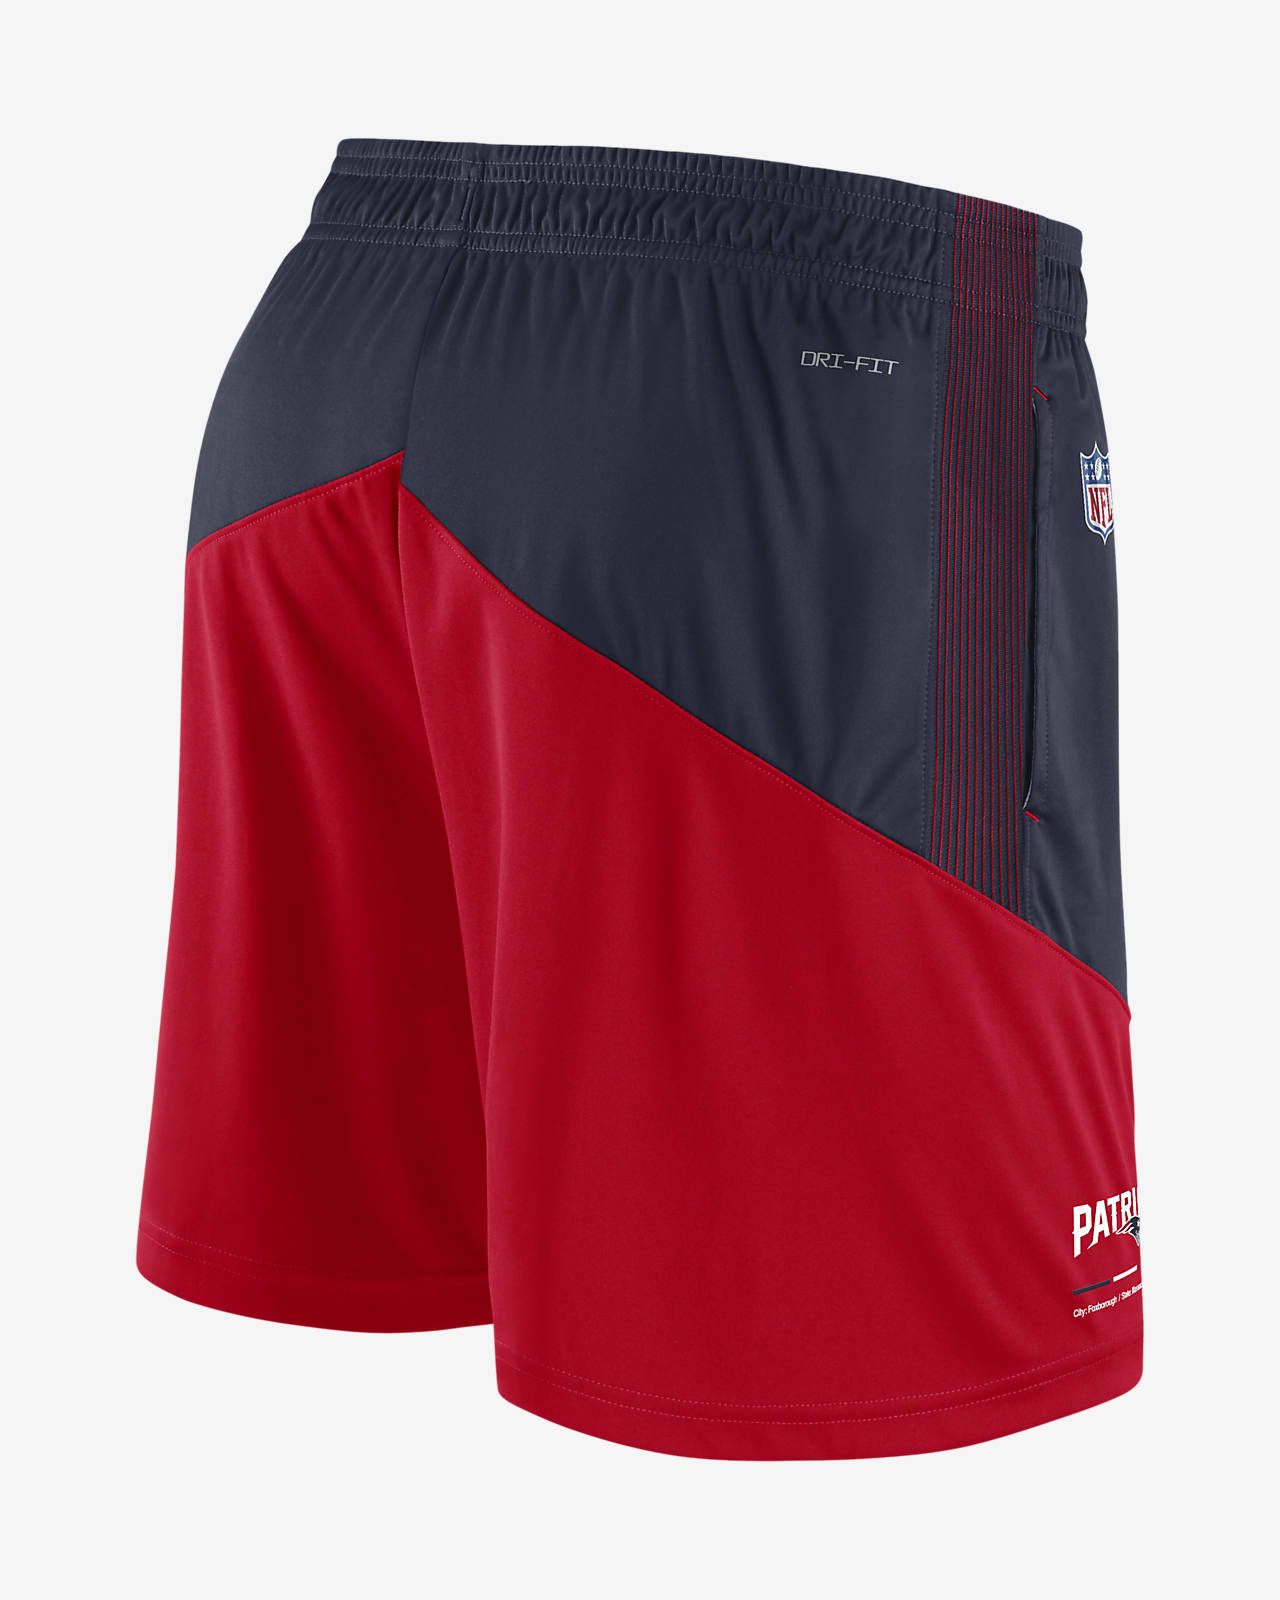 Nike Dri-FIT Primary Lockup (NFL New England Patriots) Men's Shorts